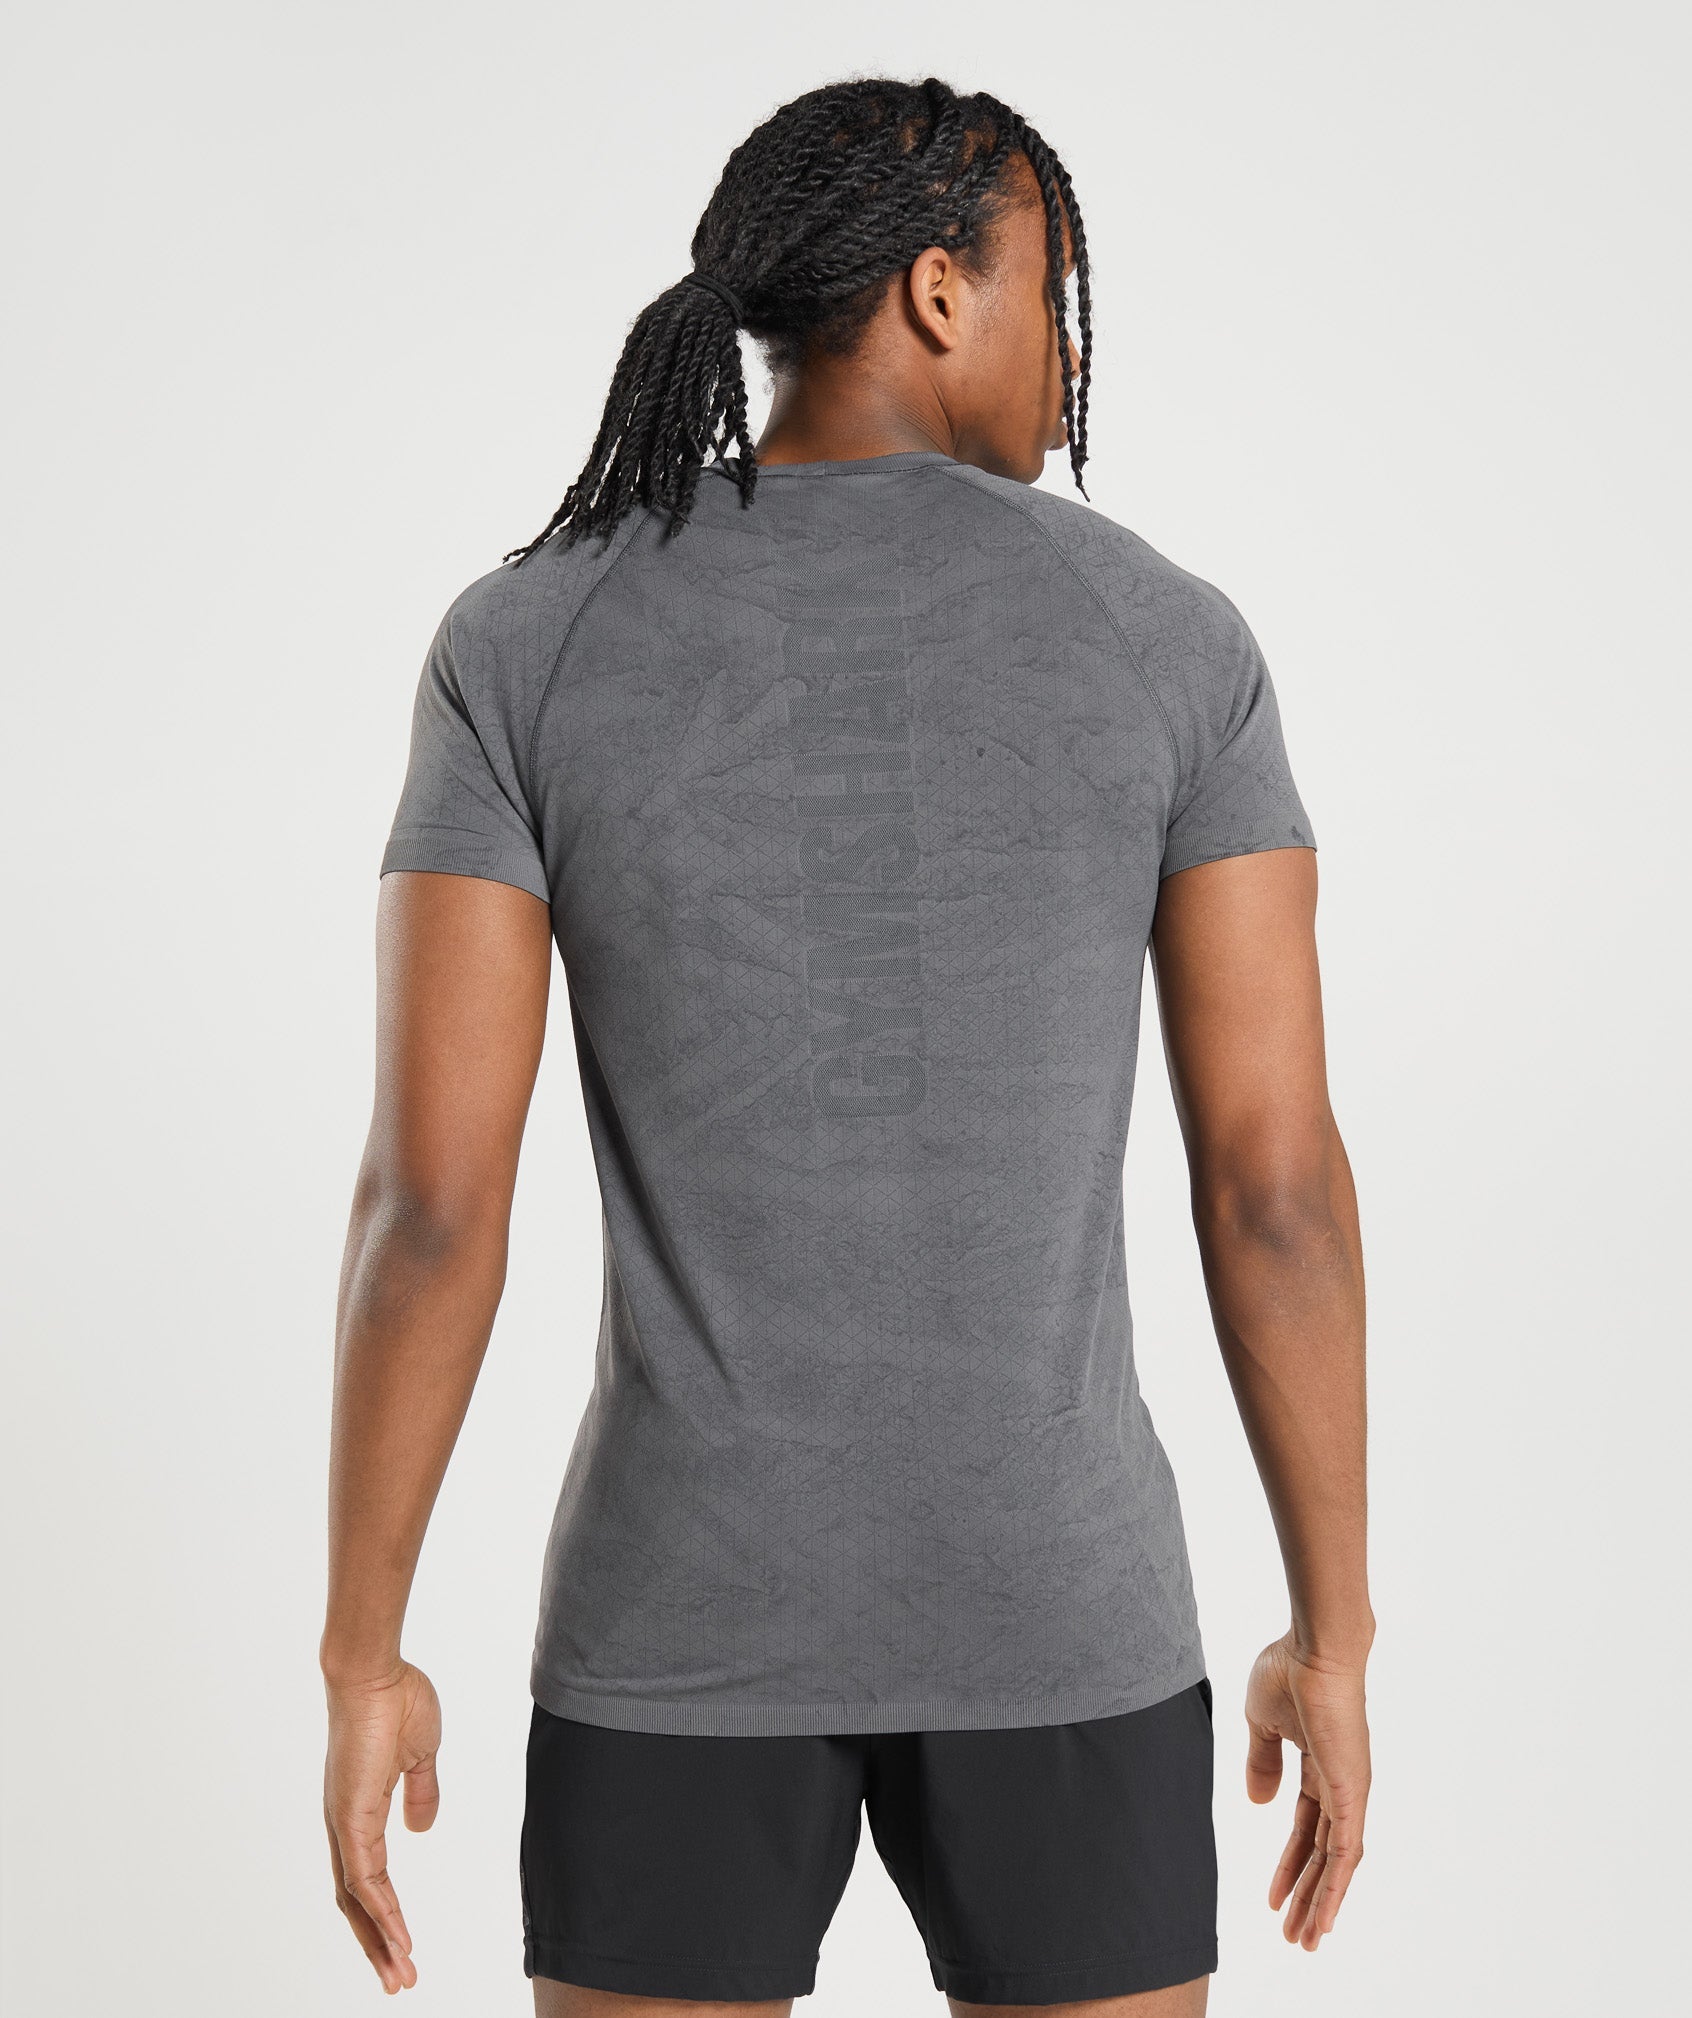 Geo Seamless T-Shirt in Charcoal Grey/Black